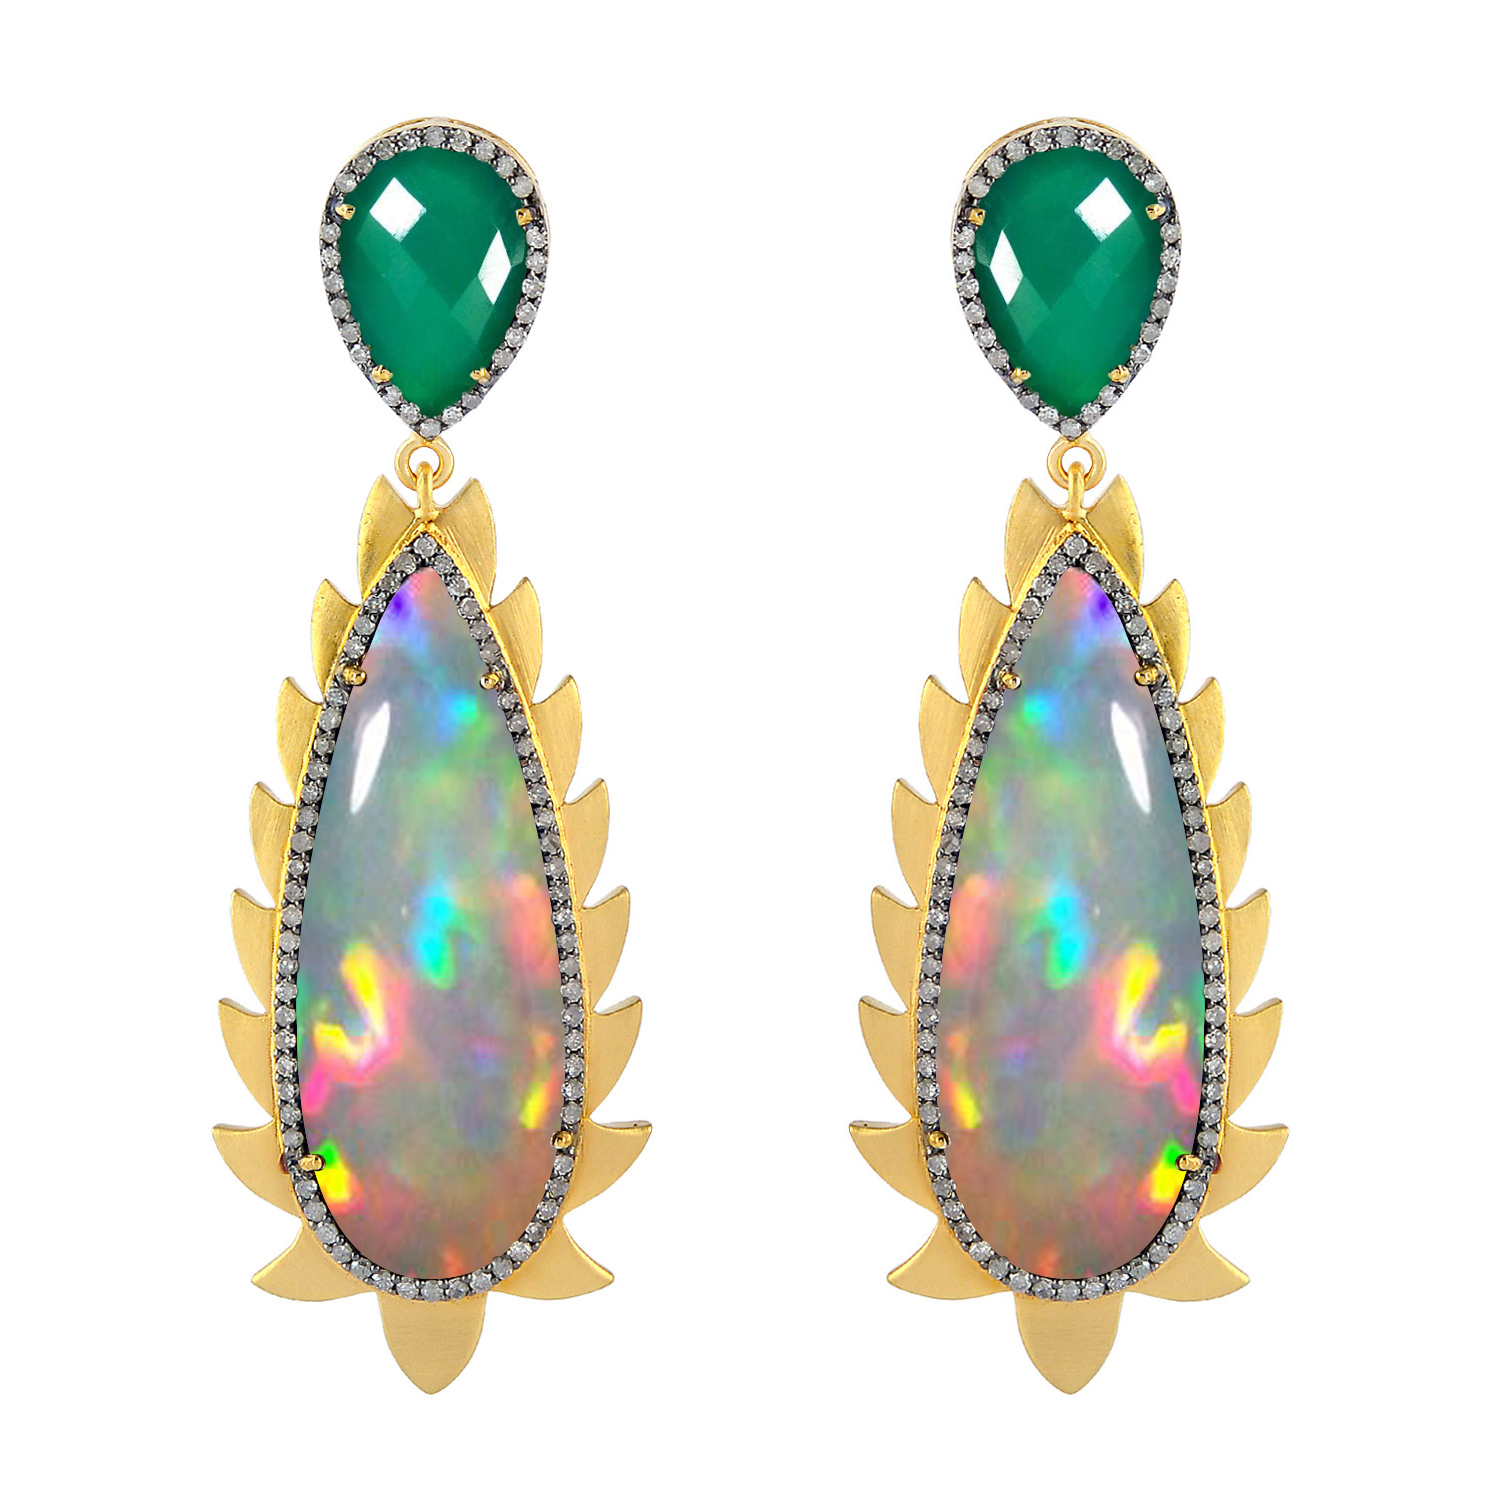 Sterling Silver Onyx And Opal Dangle Earrings